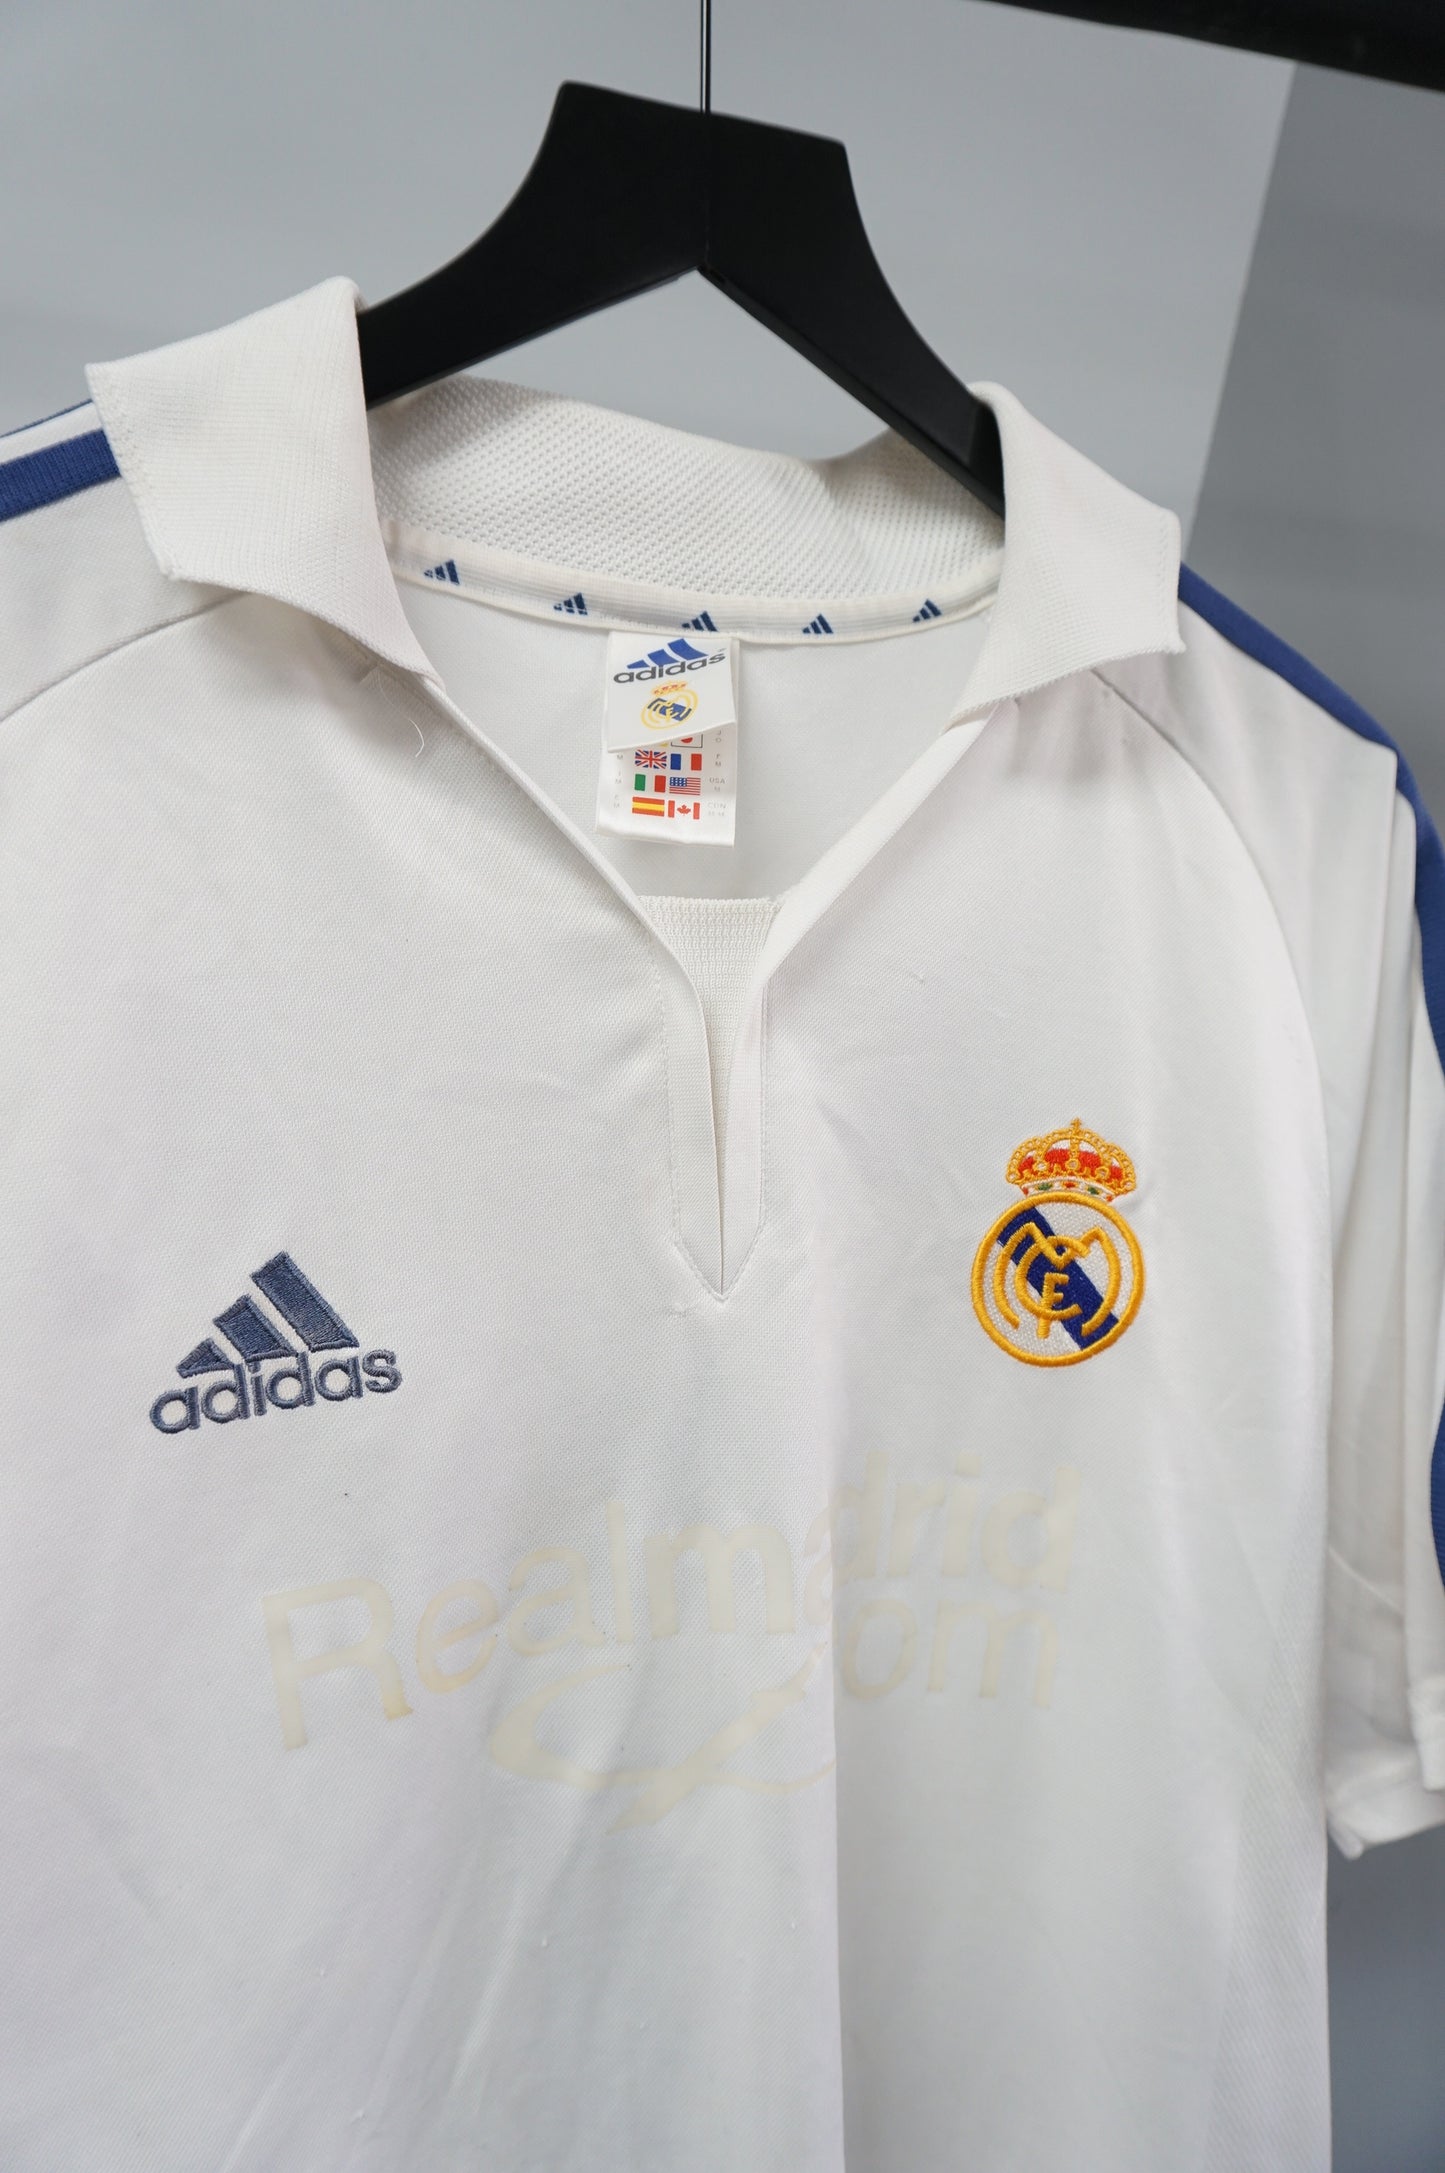 (M/L) Real Madrid Raul Jersey